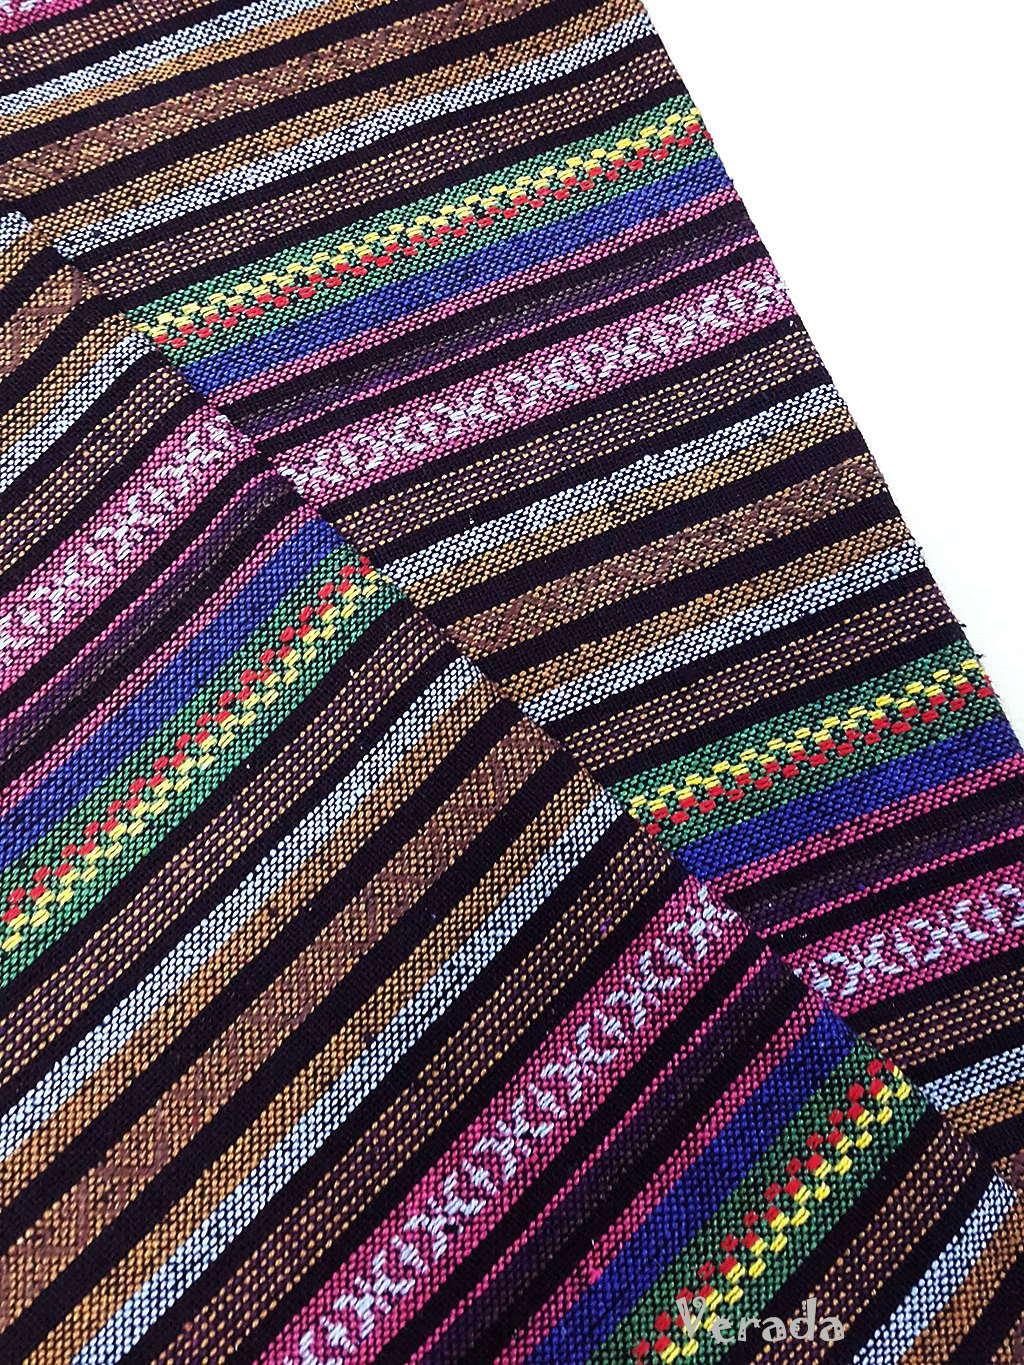 Thai Tribal Native Woven Fabric Textile 1/2 yard (WF94)